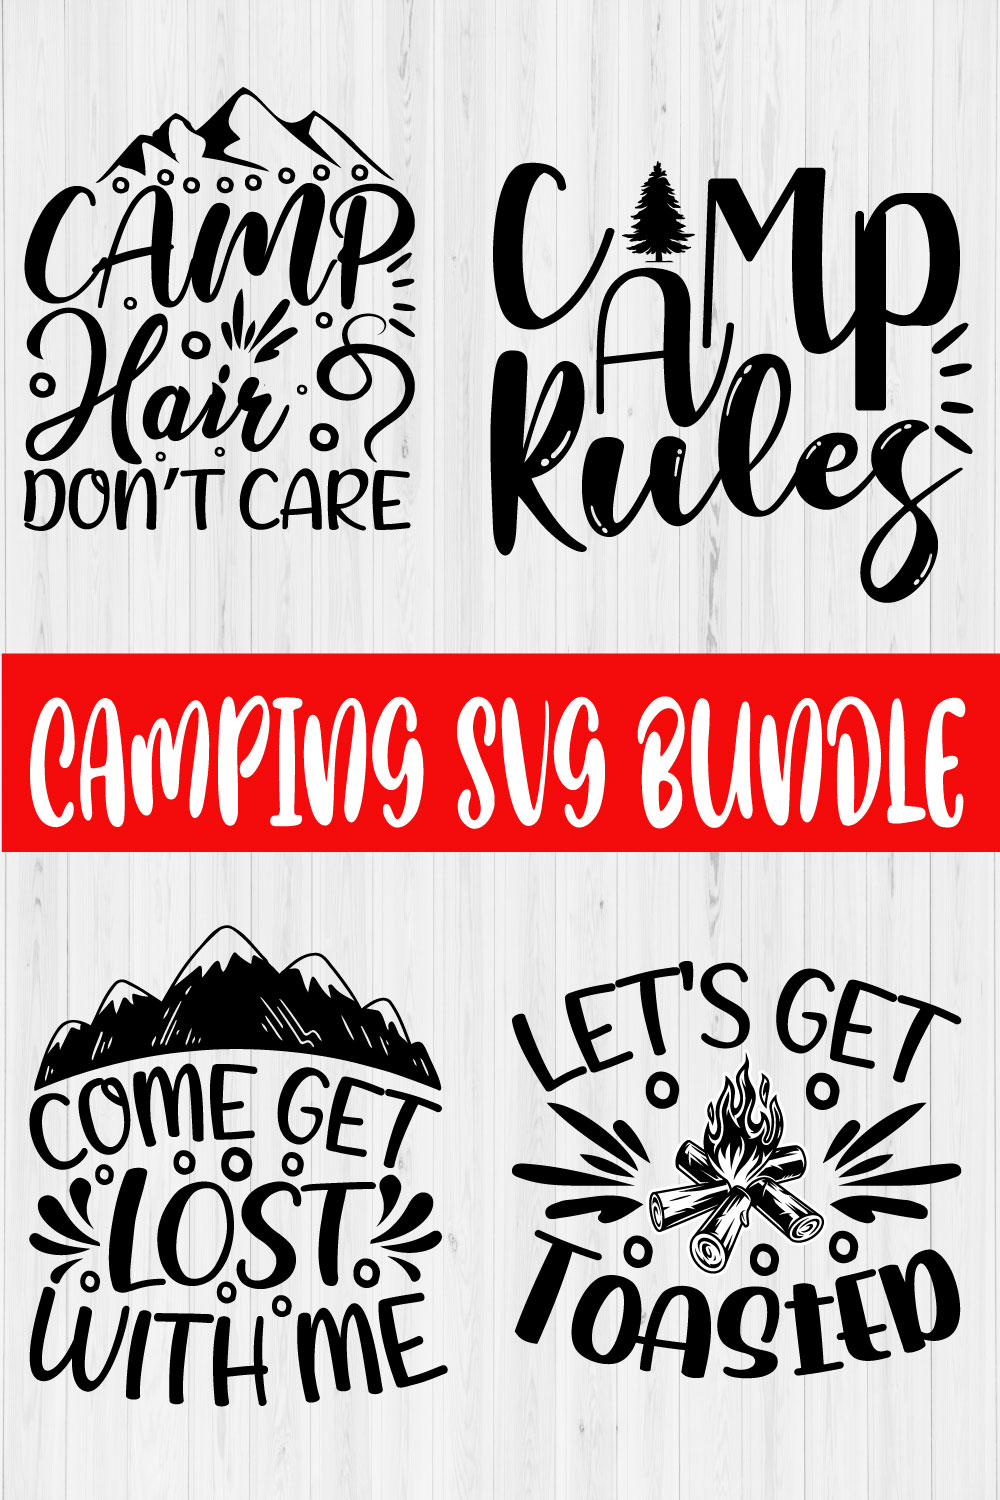 Camping Svg Quote Bundle Vol3 pinterest preview image.